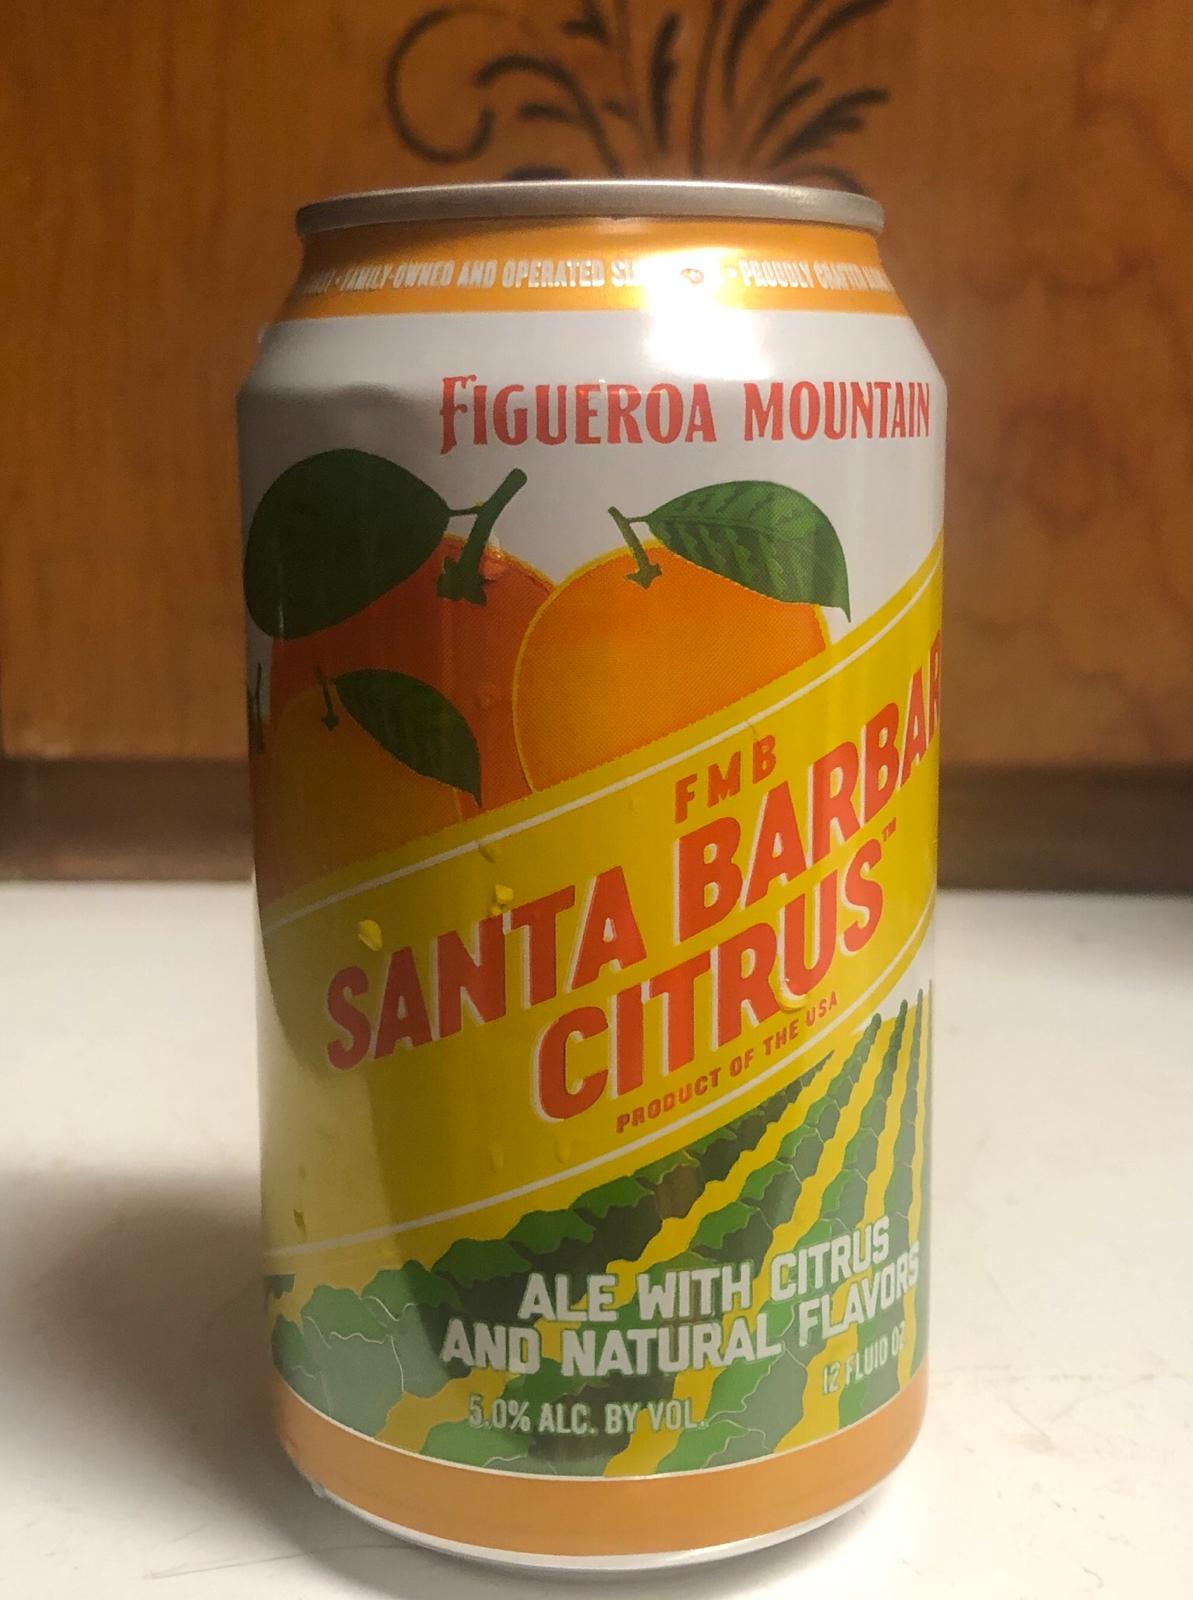 Santa Barbara Citrus